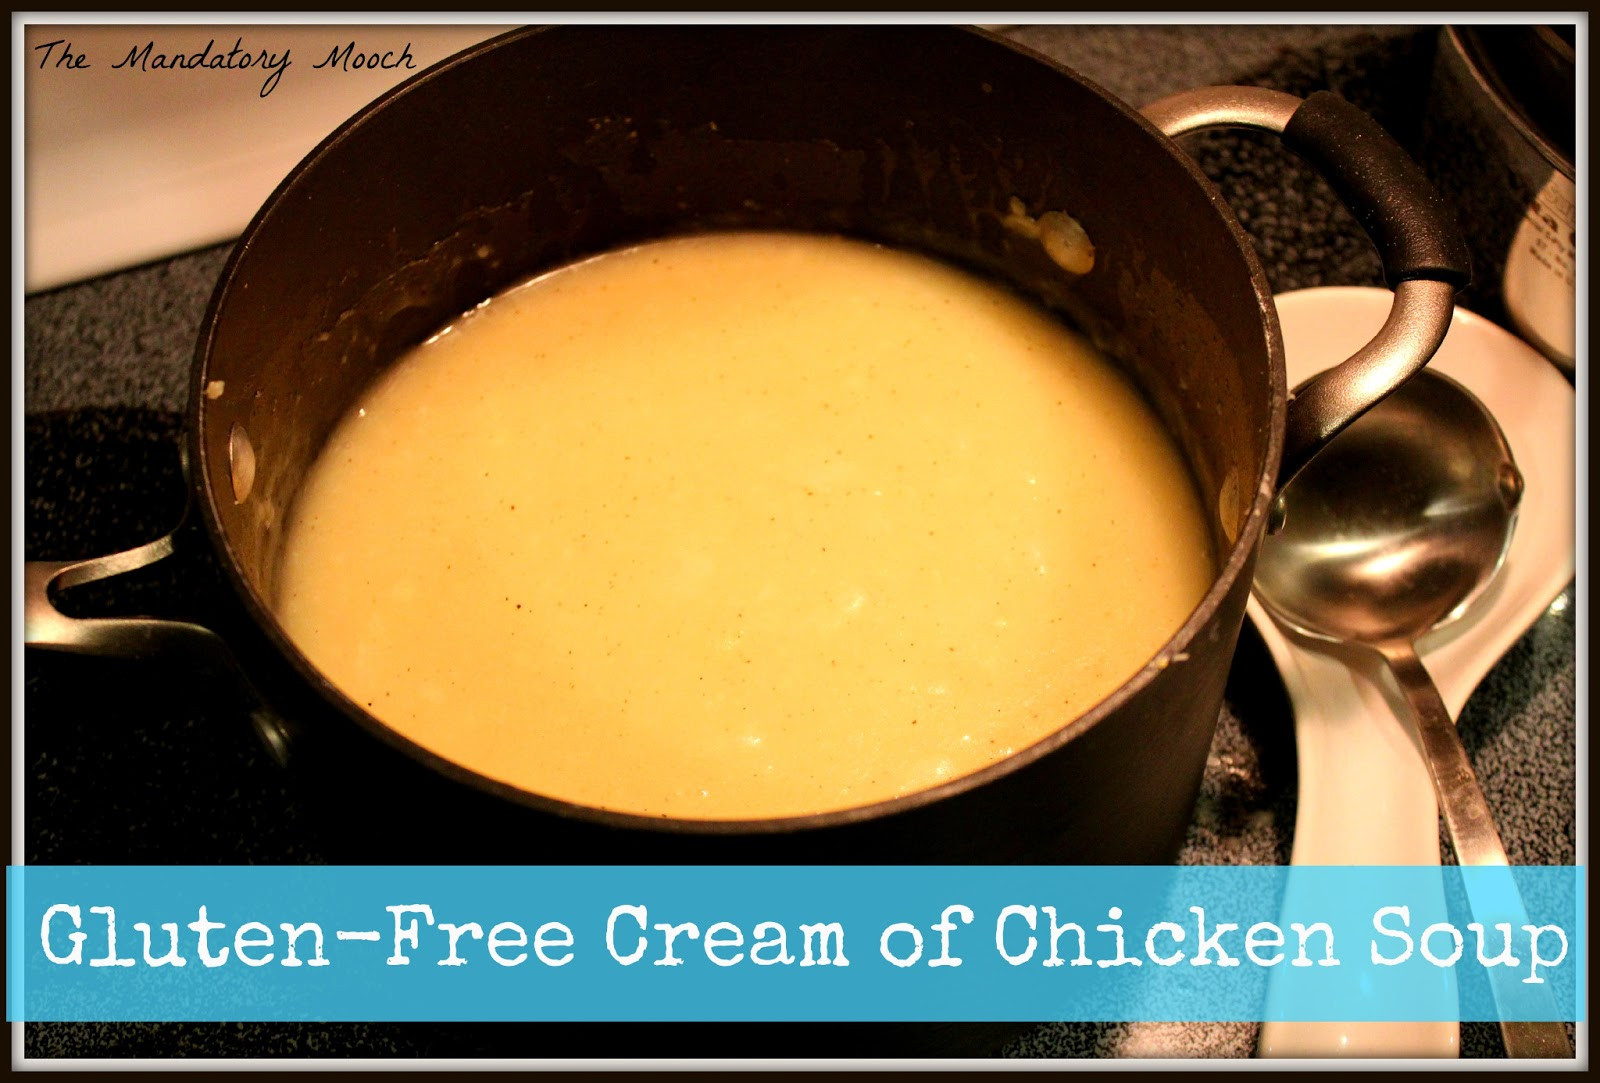 Dairy Free Cream Of Chicken Soup
 The Mandatory Mooch Gluten Free Cream of Chicken Soup